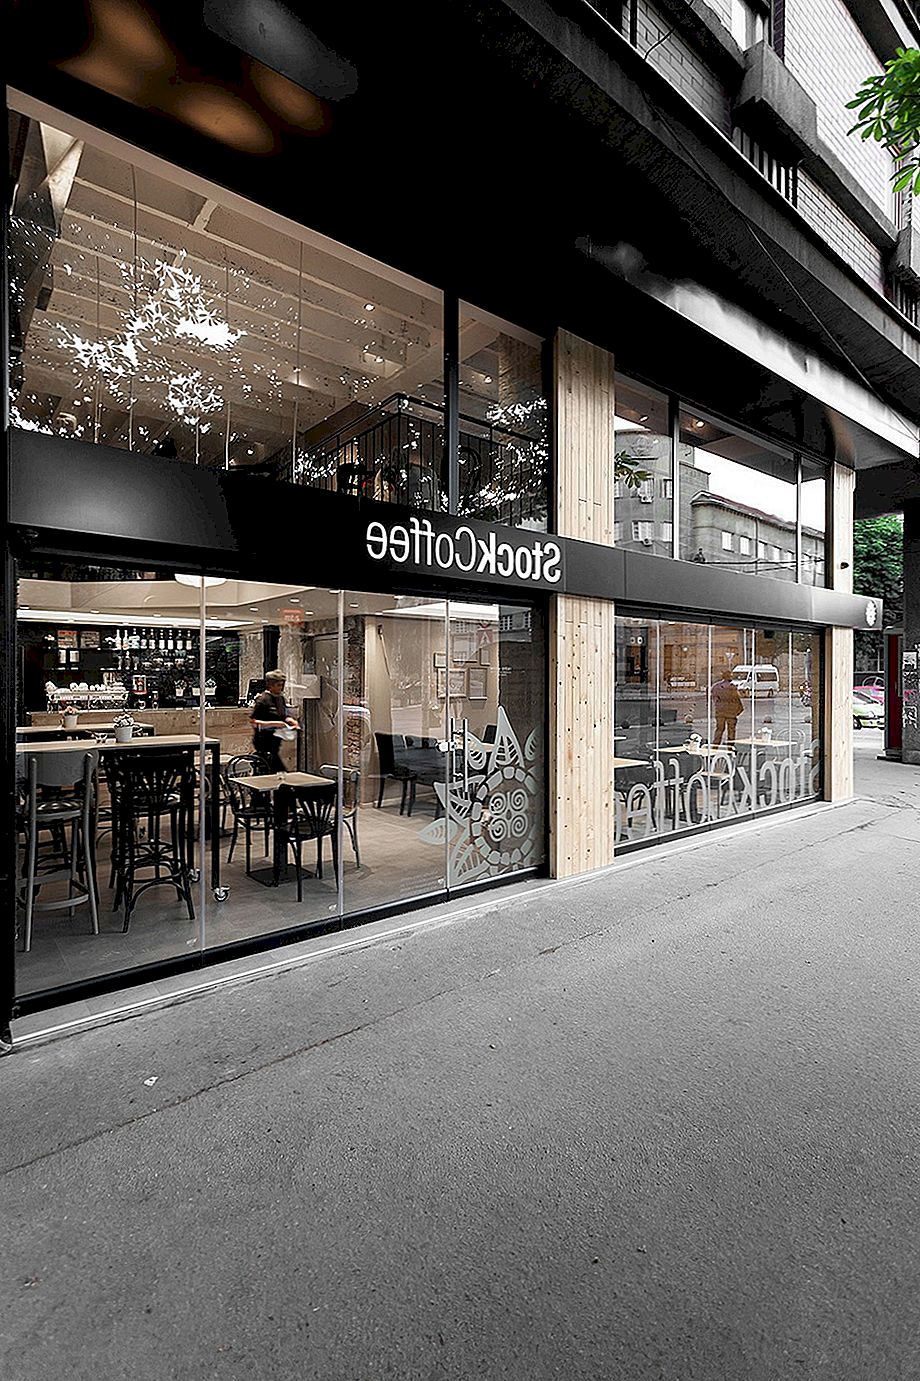 Retail Space Konverterad till Fresh Coffee Shop Design i Serbien